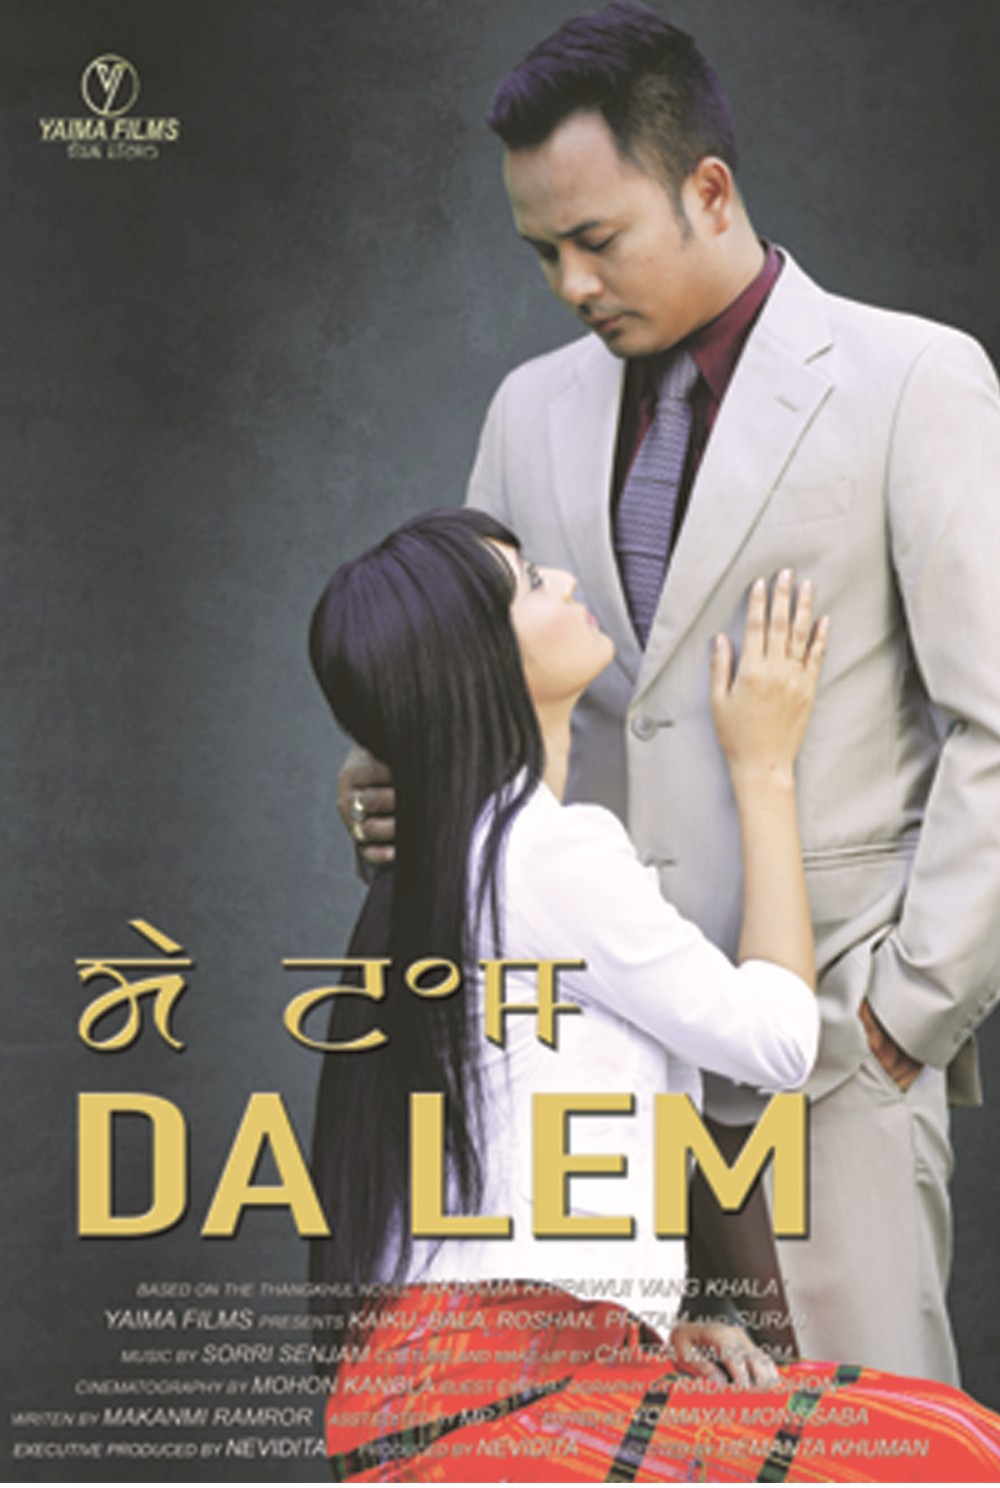 Da Lem : Film released at MFDC 